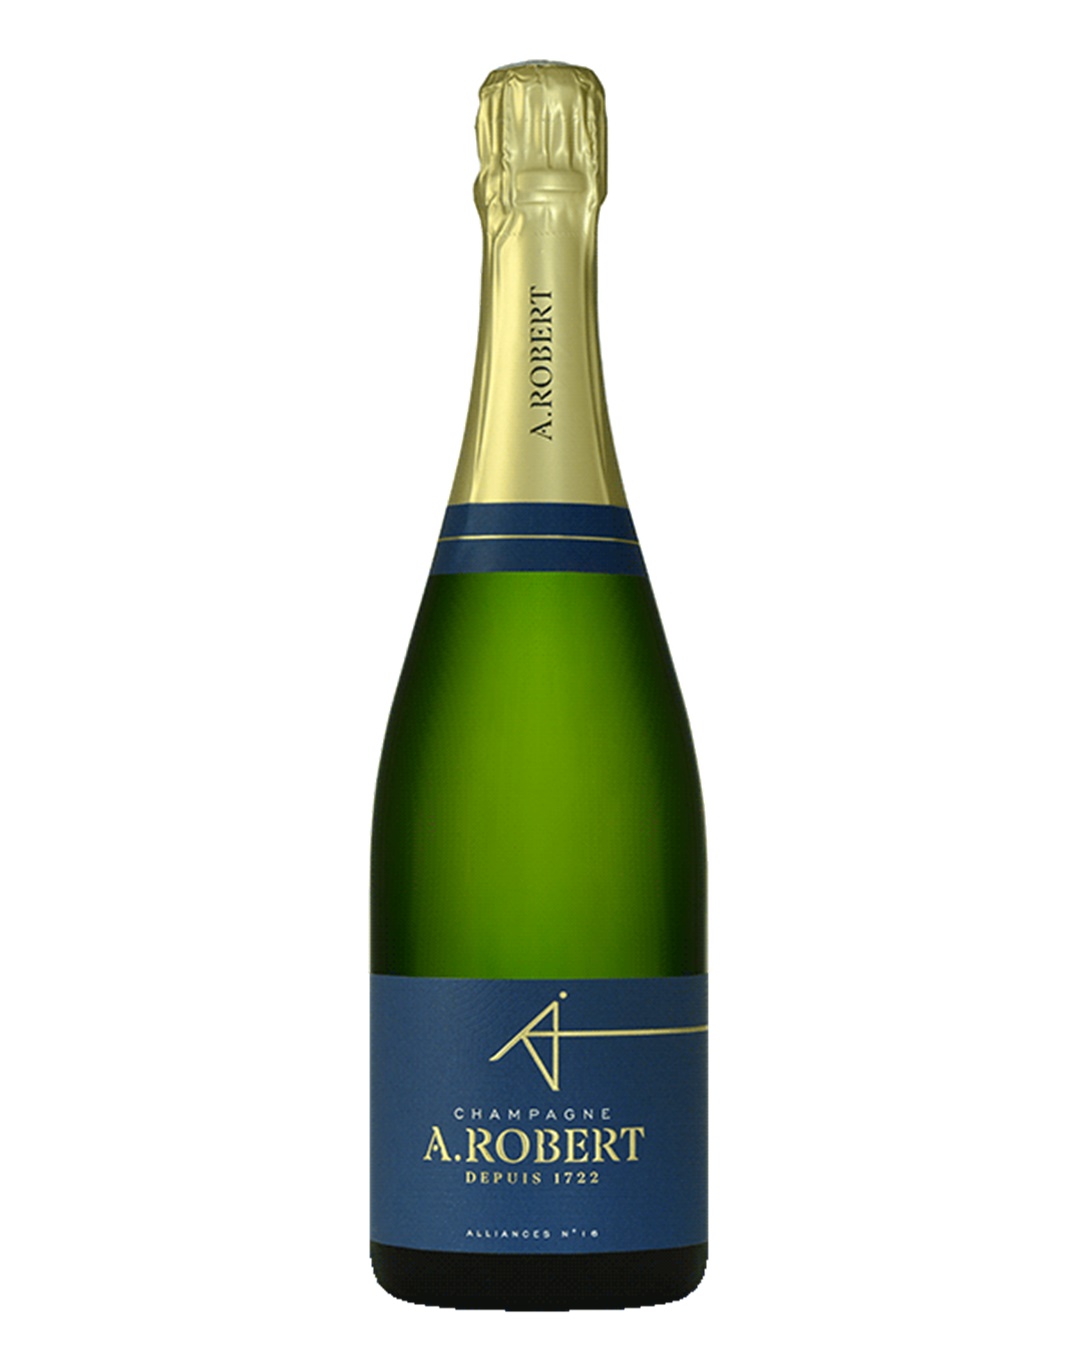 Champagne A. Robert Alliances 16 Brut